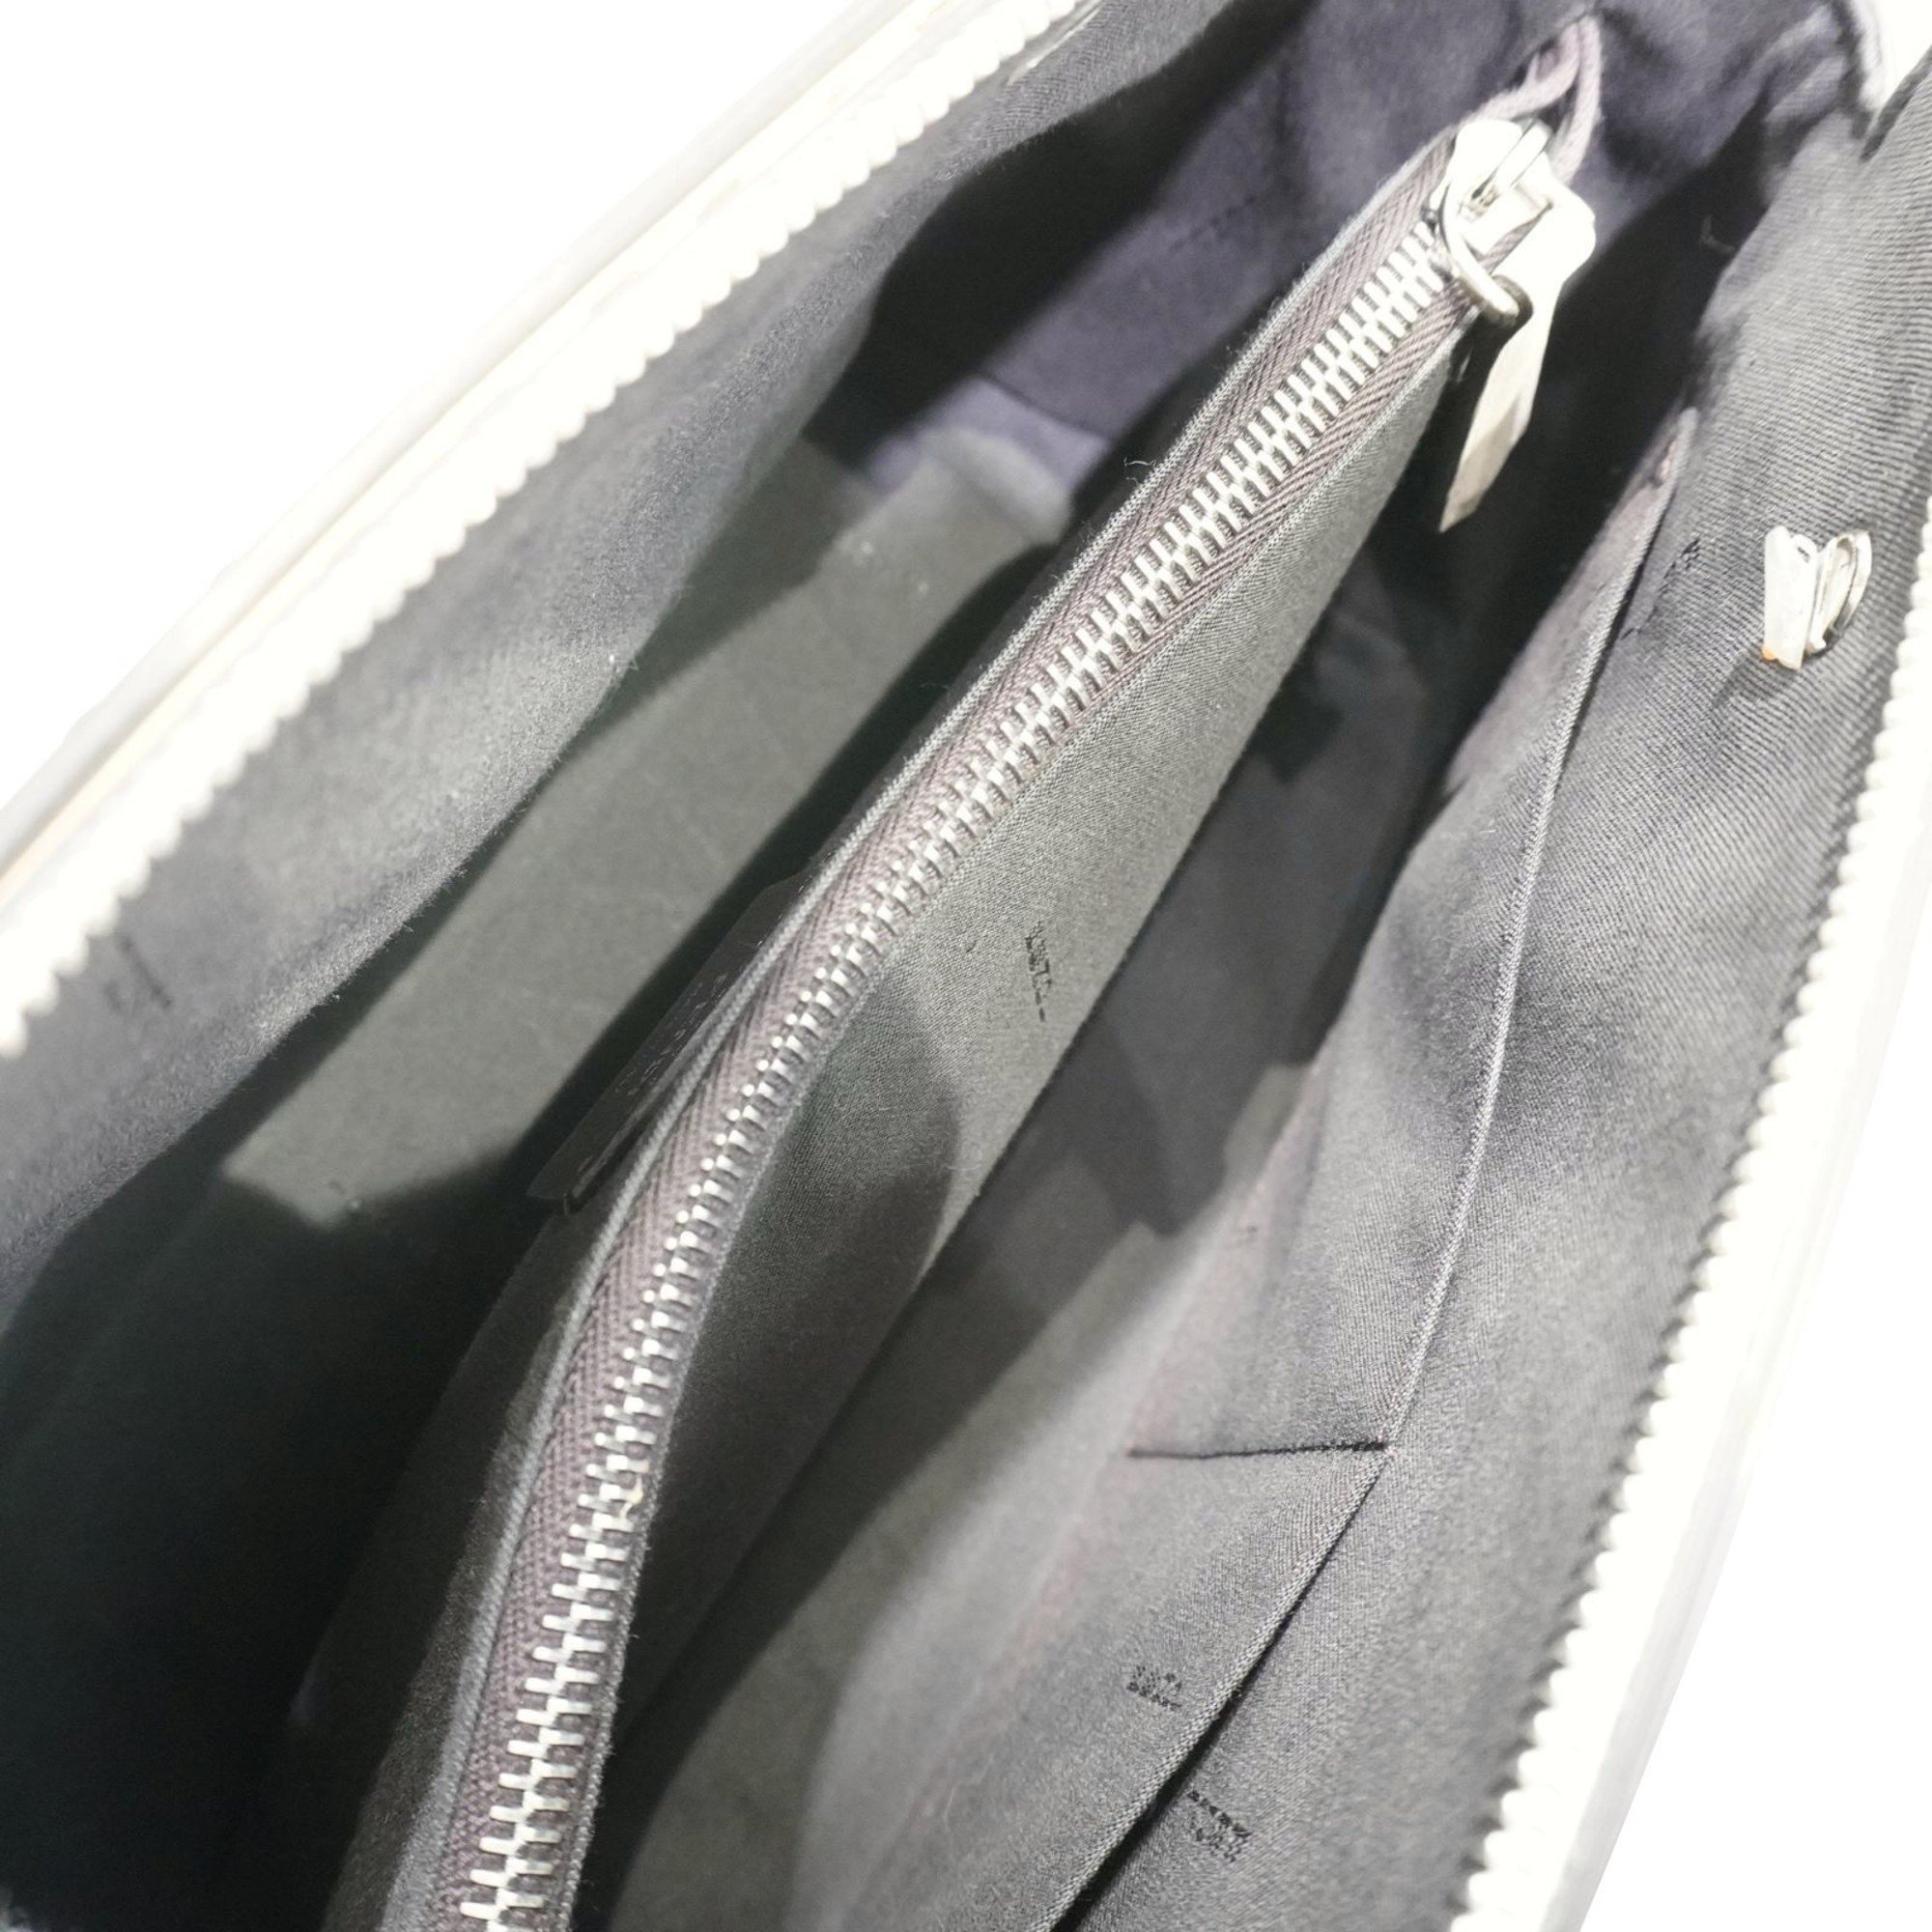 FENDI By the Way Medium 8BL146 Shoulder Bag White Leather B92 Women's Men's Bags